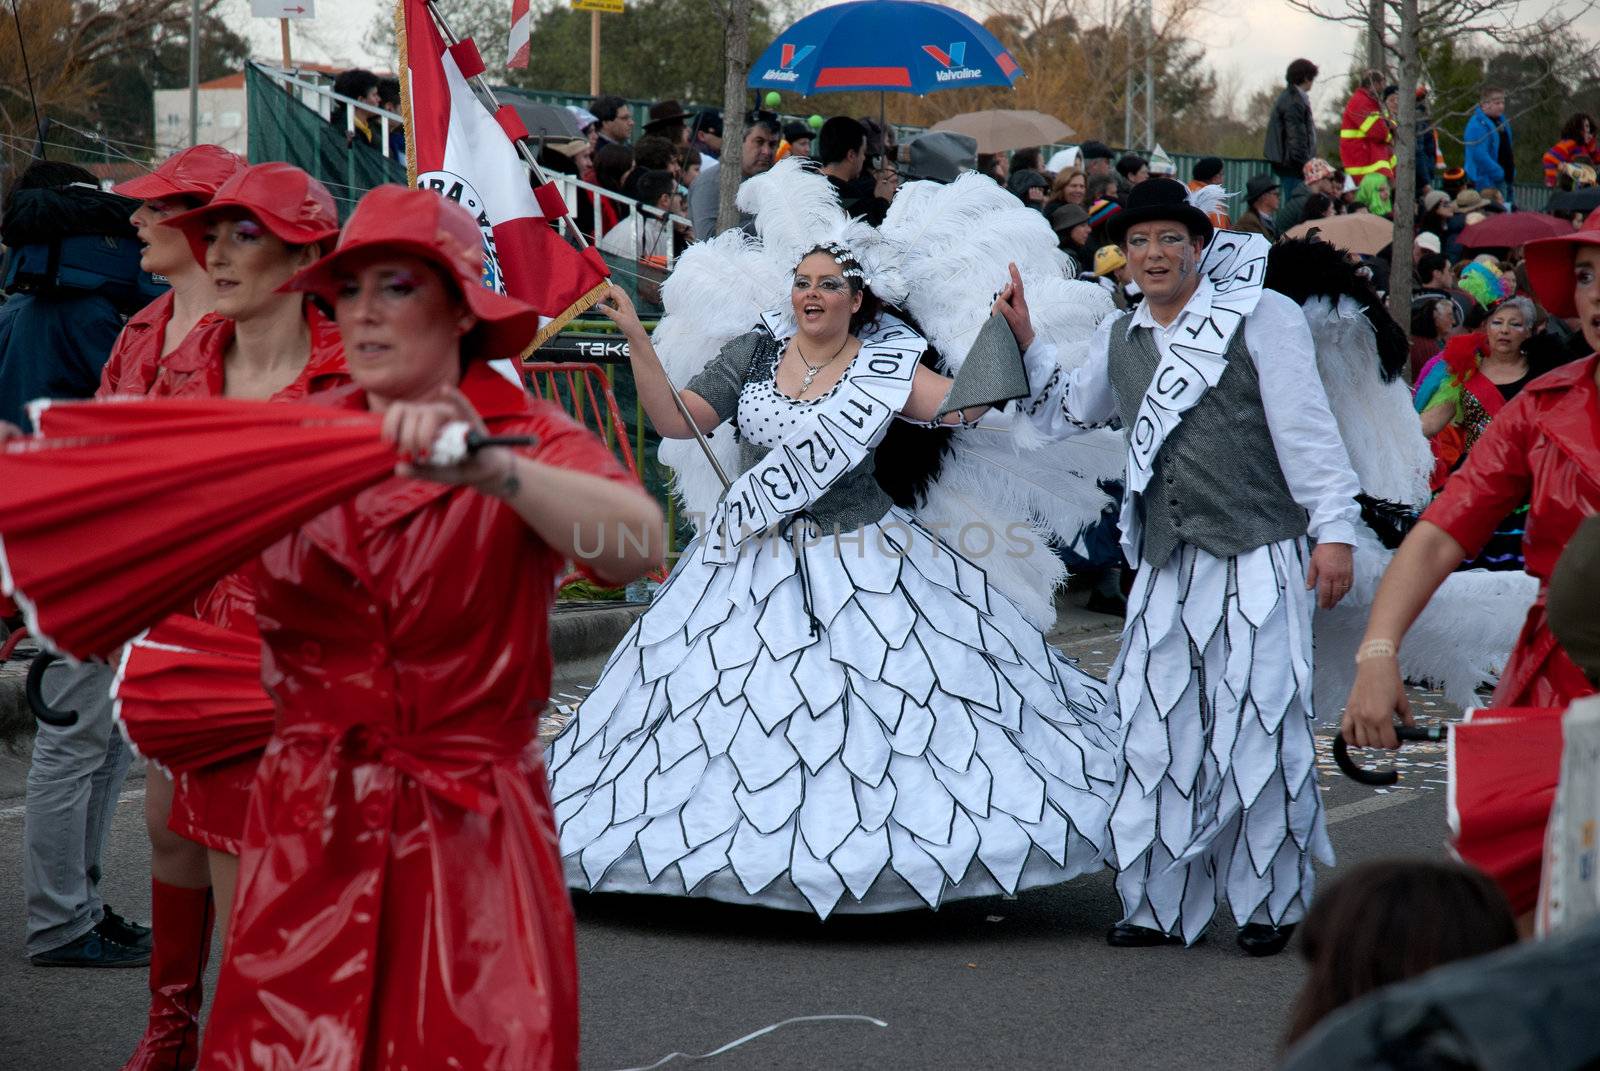 Carnaval de Ovar, Portugal by homydesign